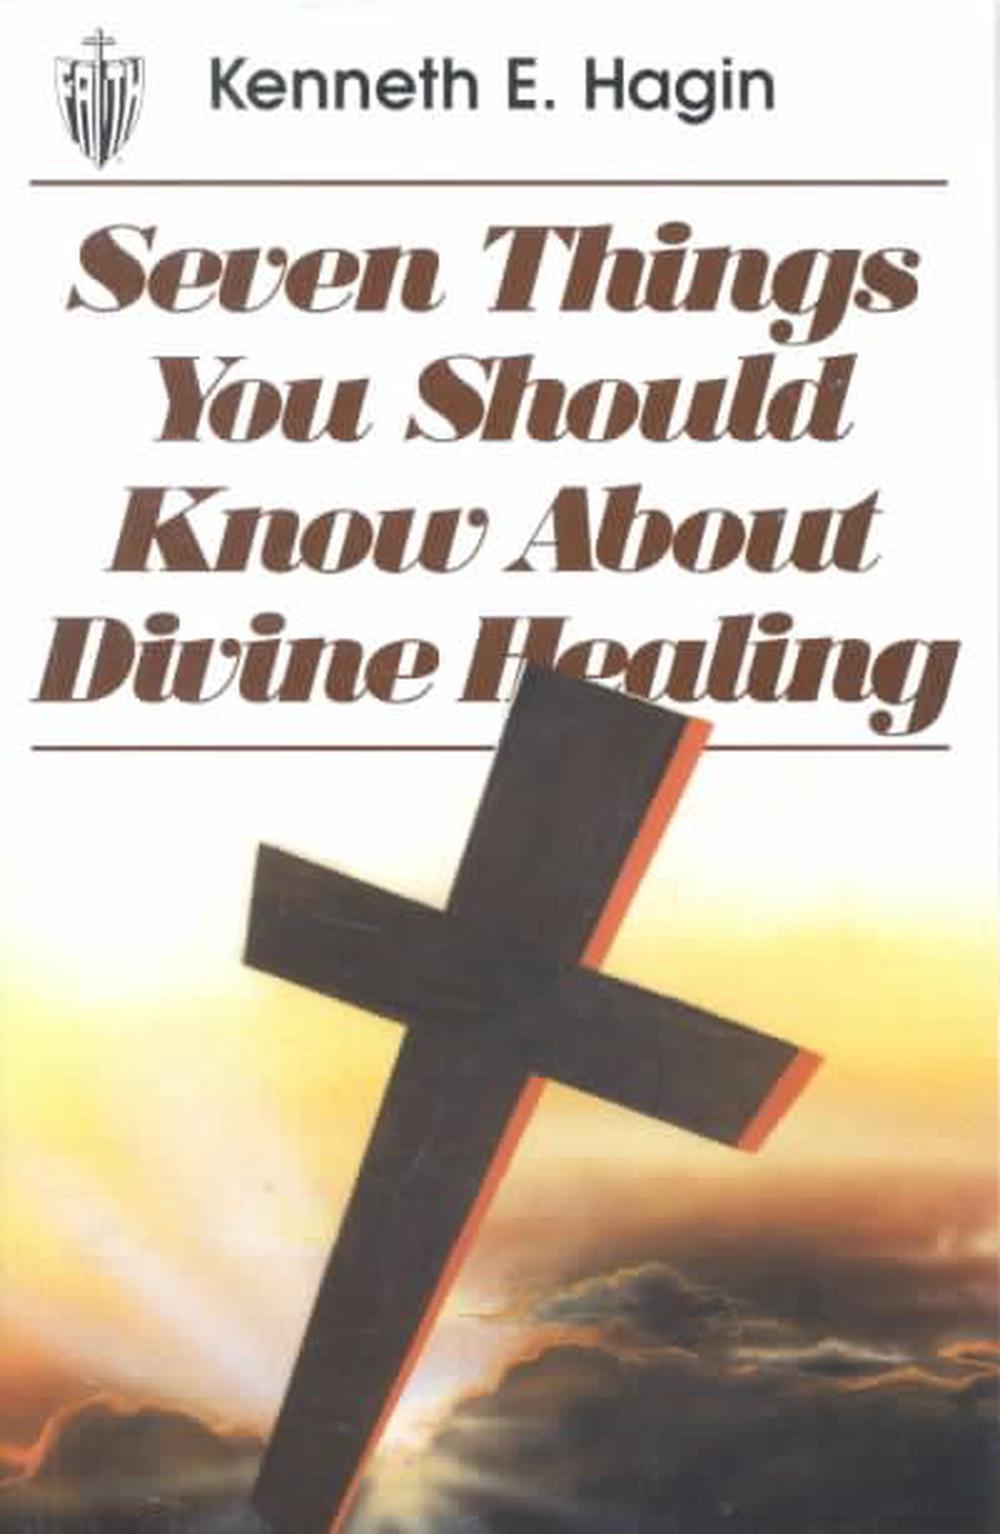 kenneth hagin healing book